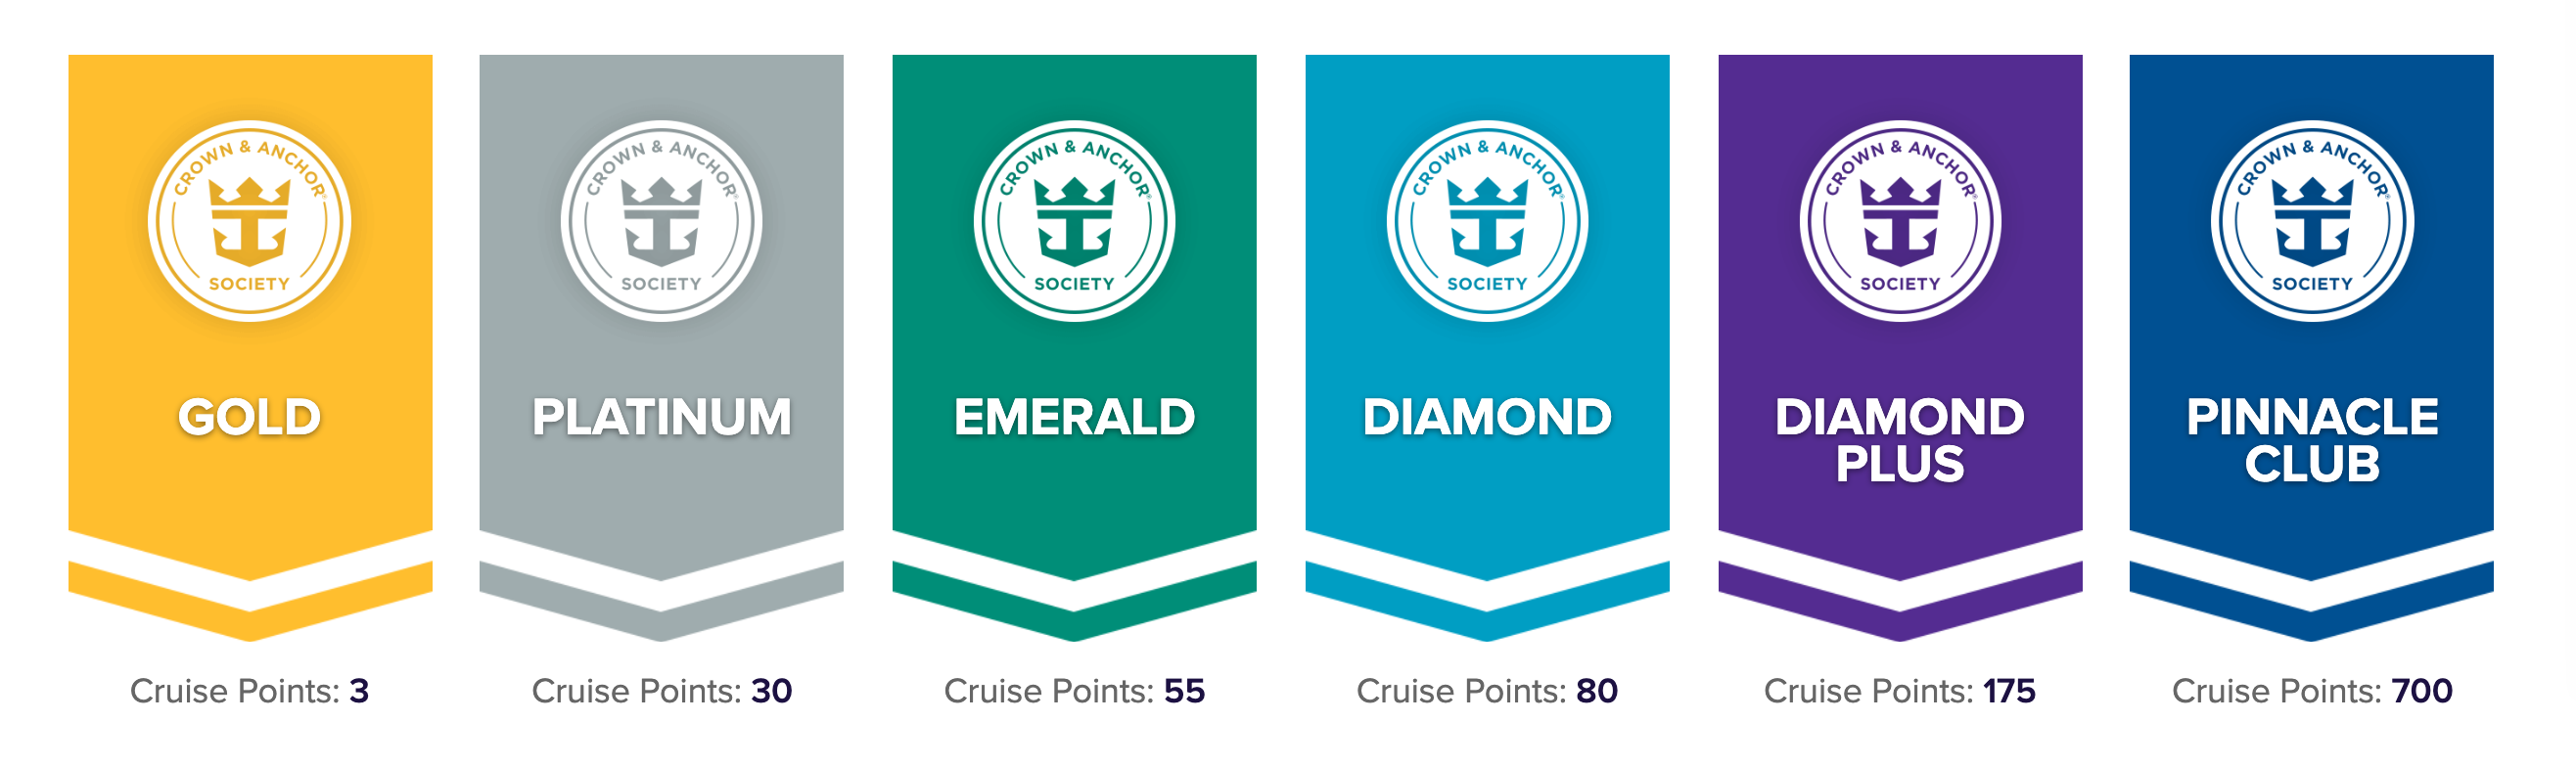 royal caribbean cruise line loyalty program